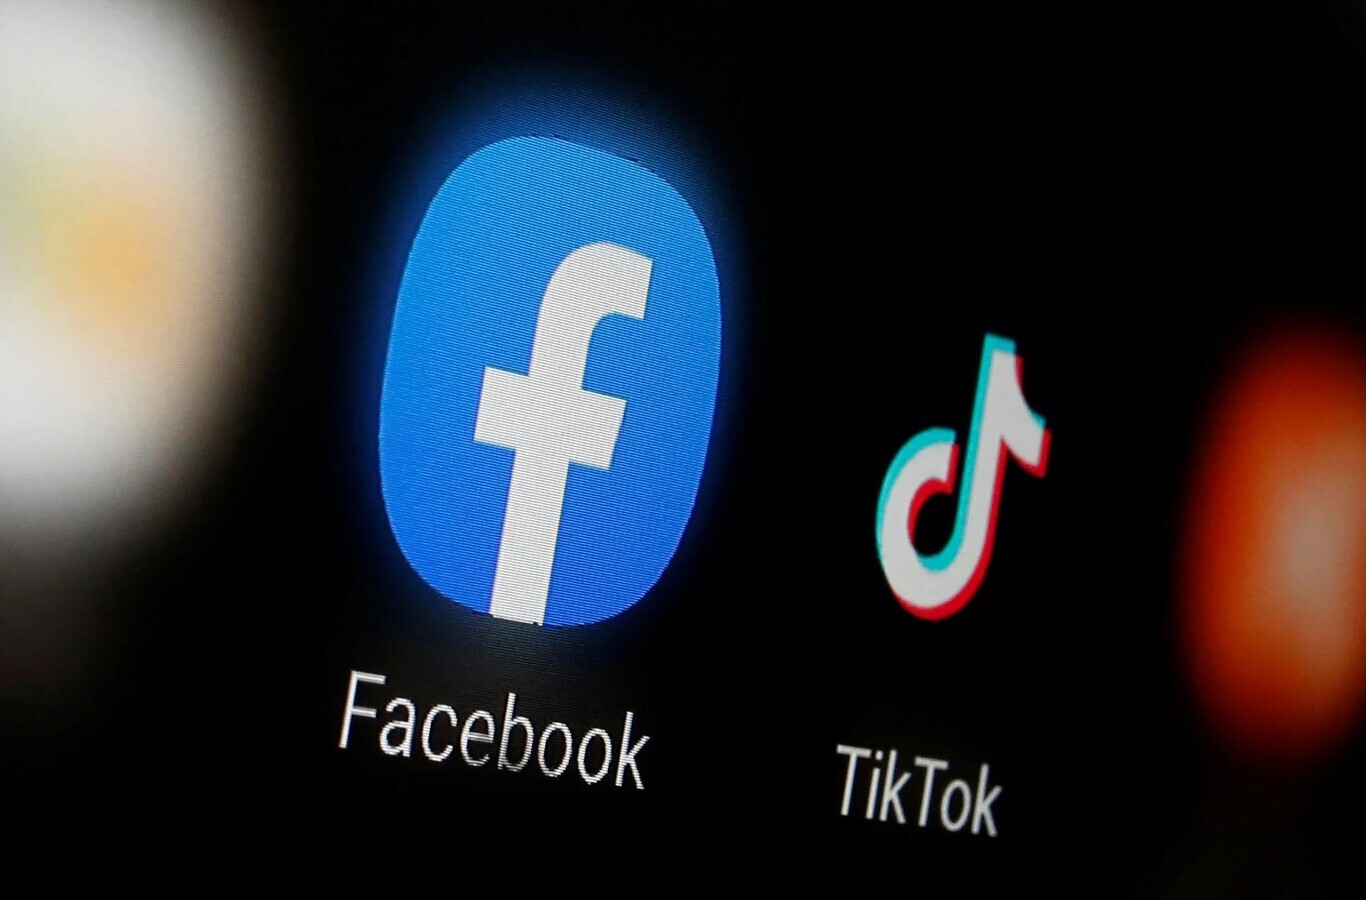 Facebook pagó por desprestigiar a TikTok